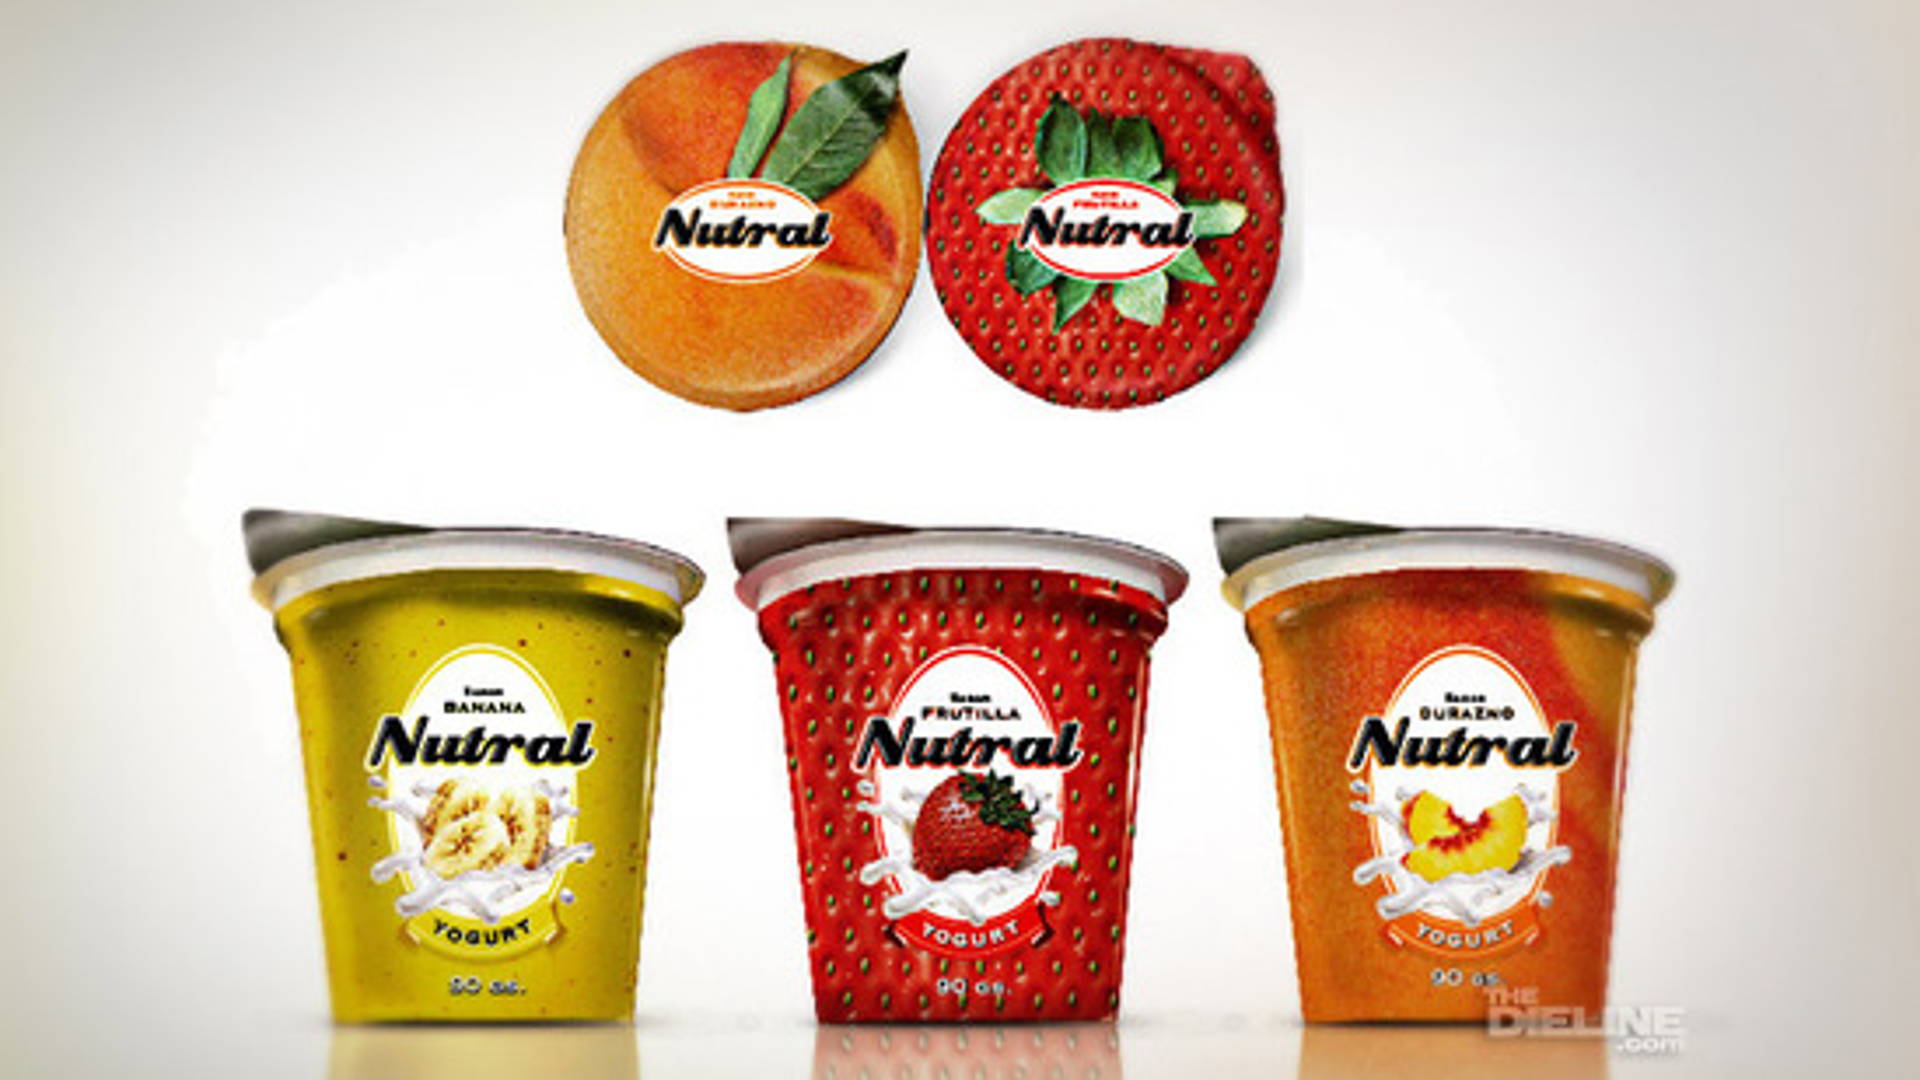 Featured image for Frutilla Nutral Yogurt